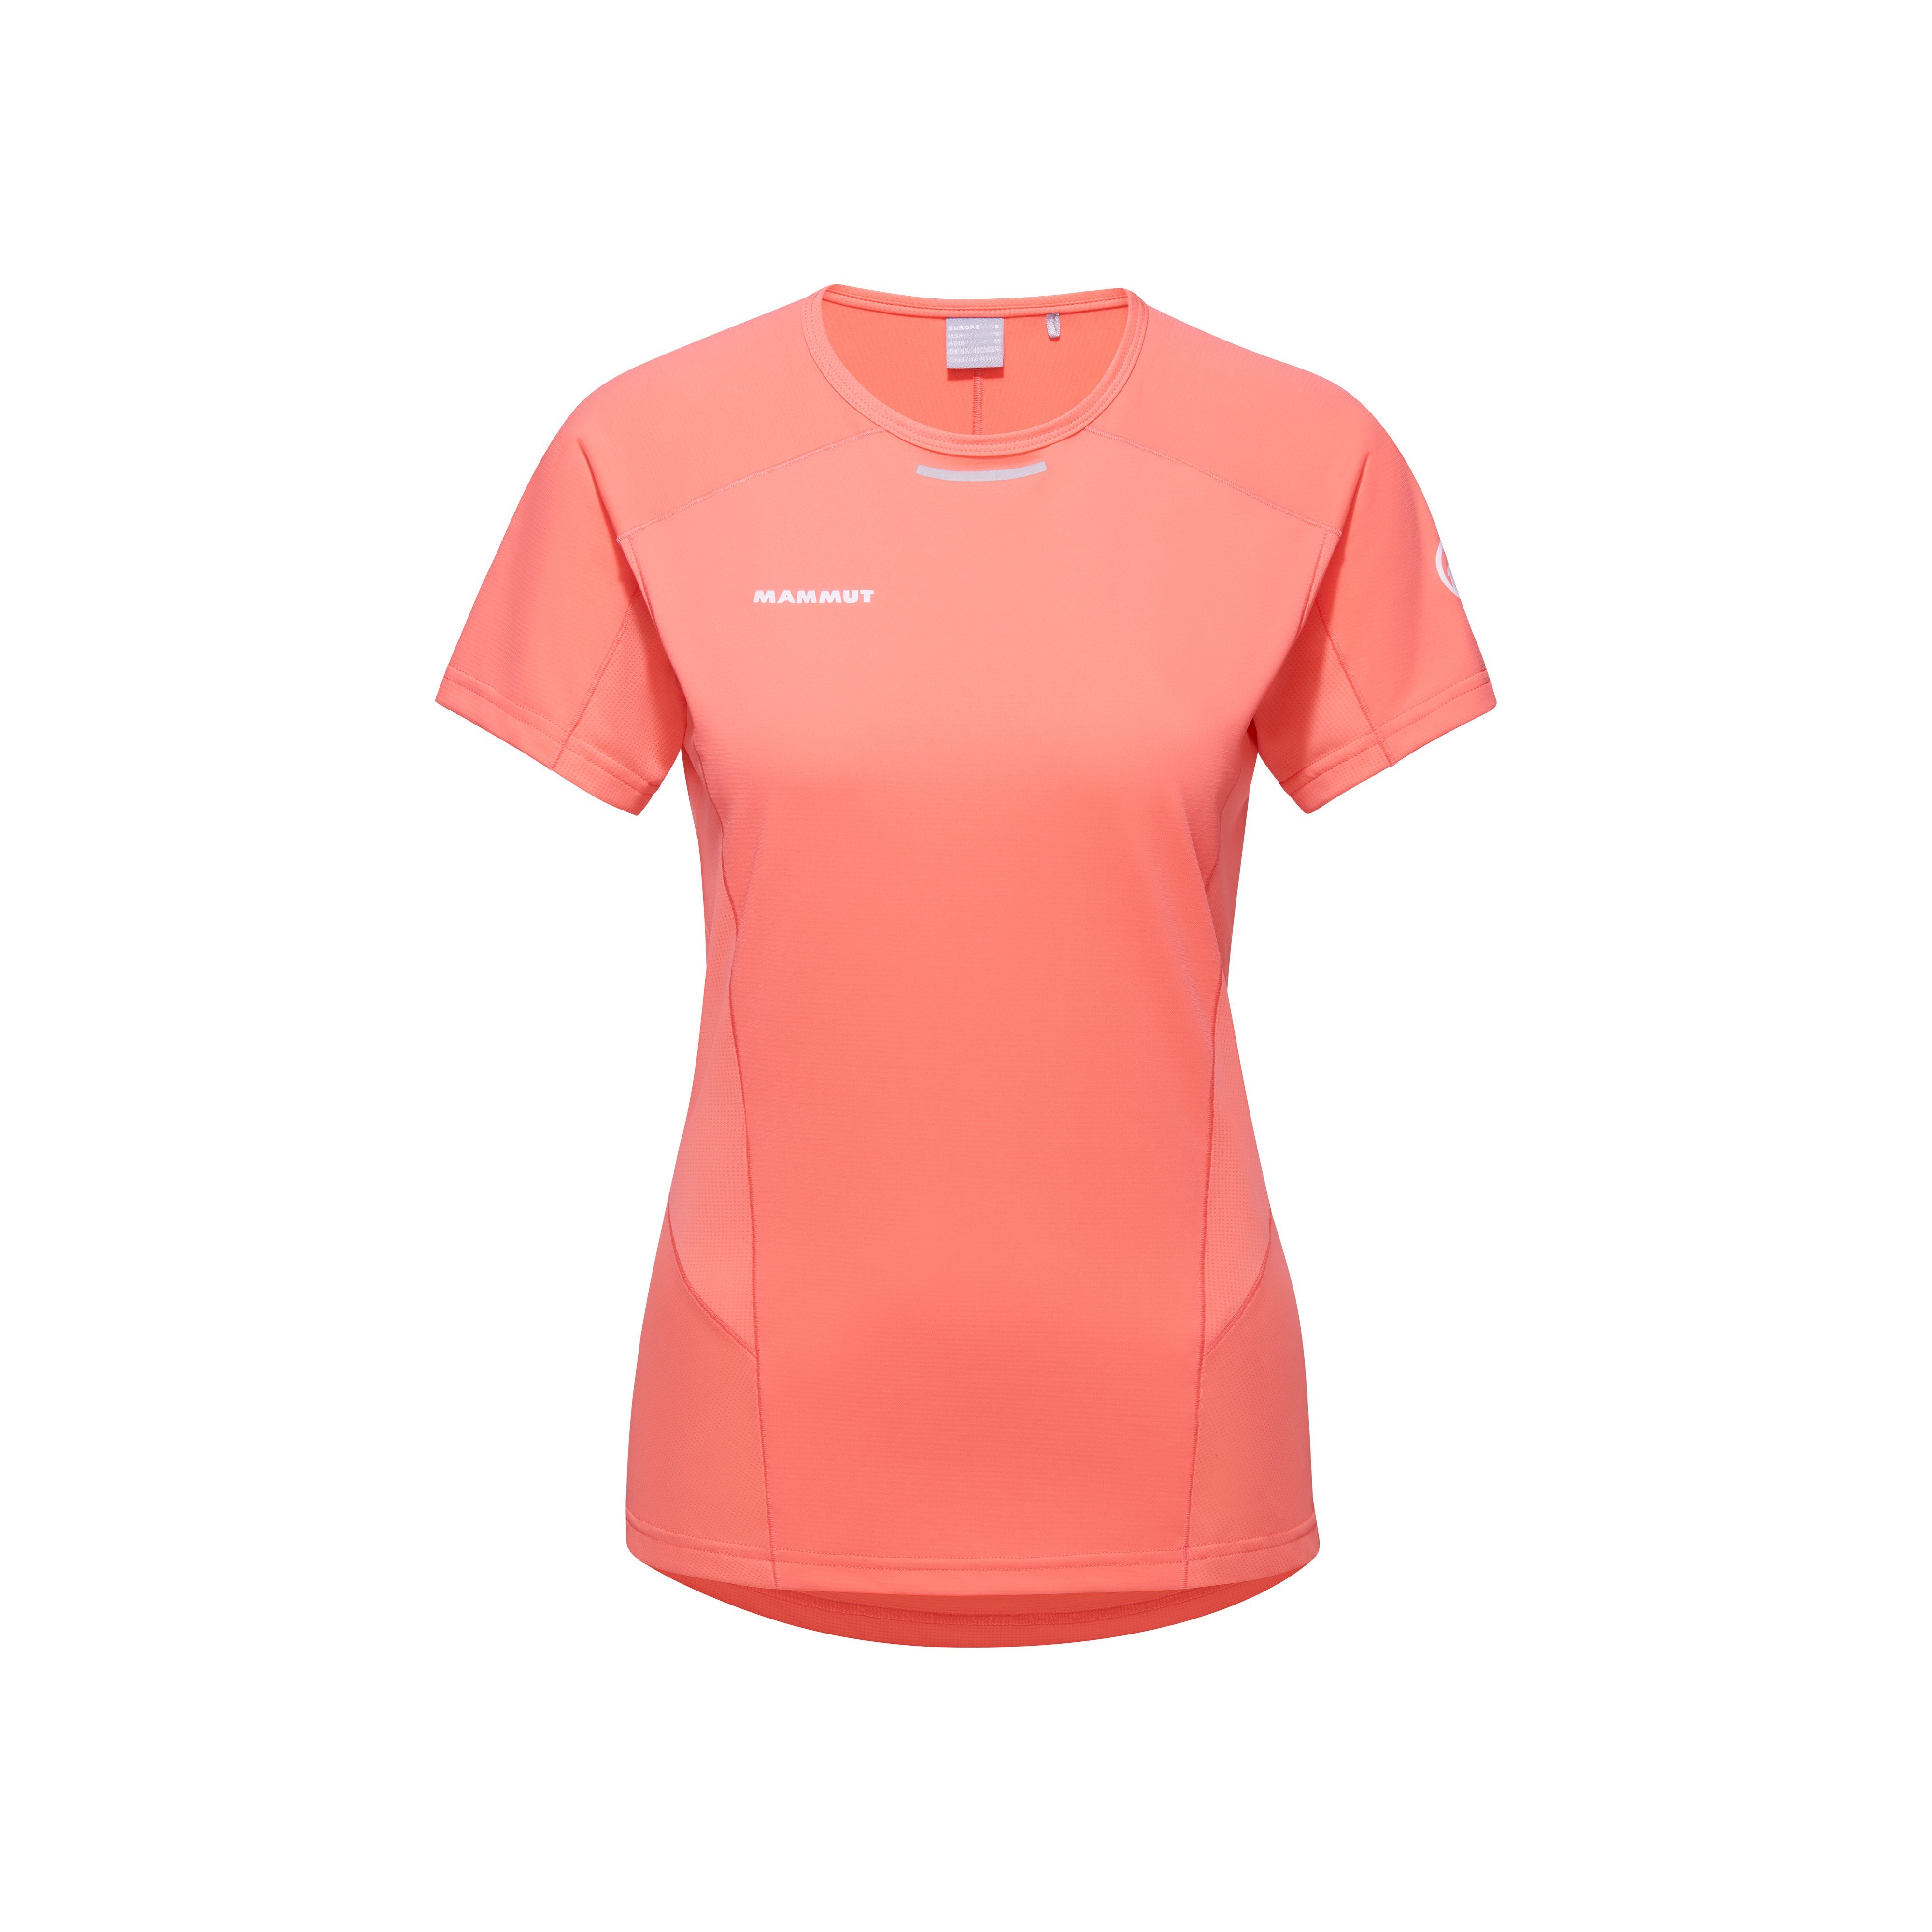 Aenergy FL T-Shirt Women - salmon, L product image